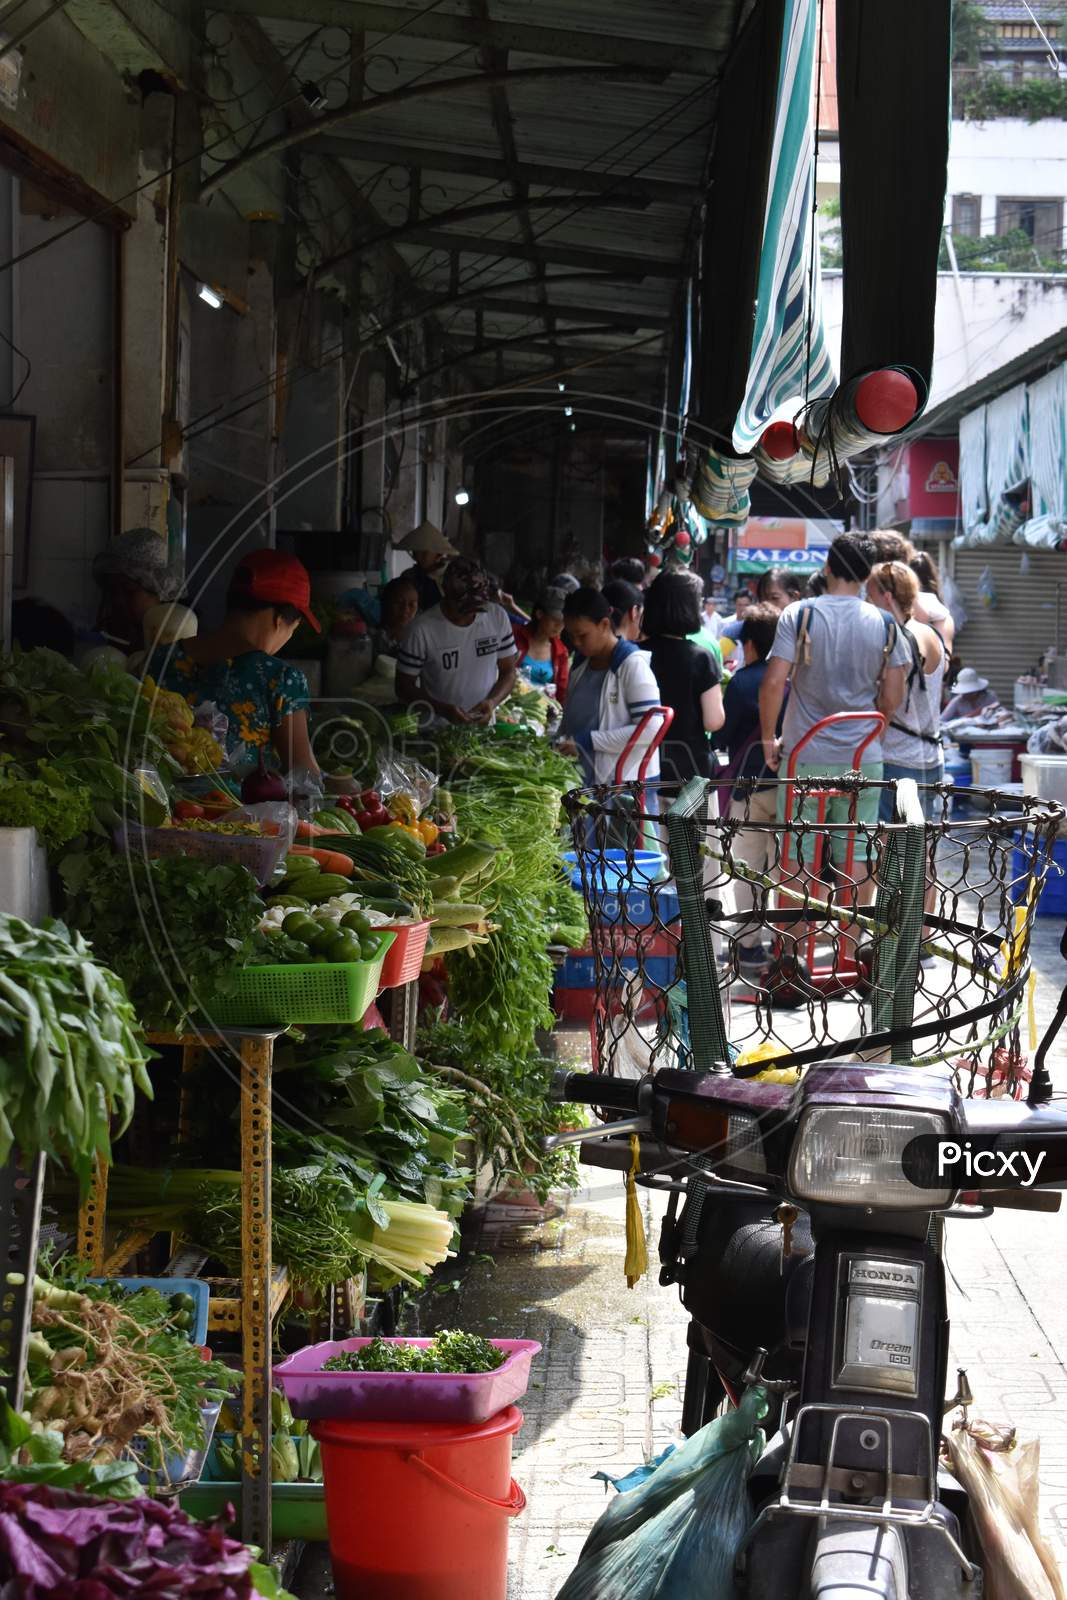 The food trading market in Da Nang Vietnam